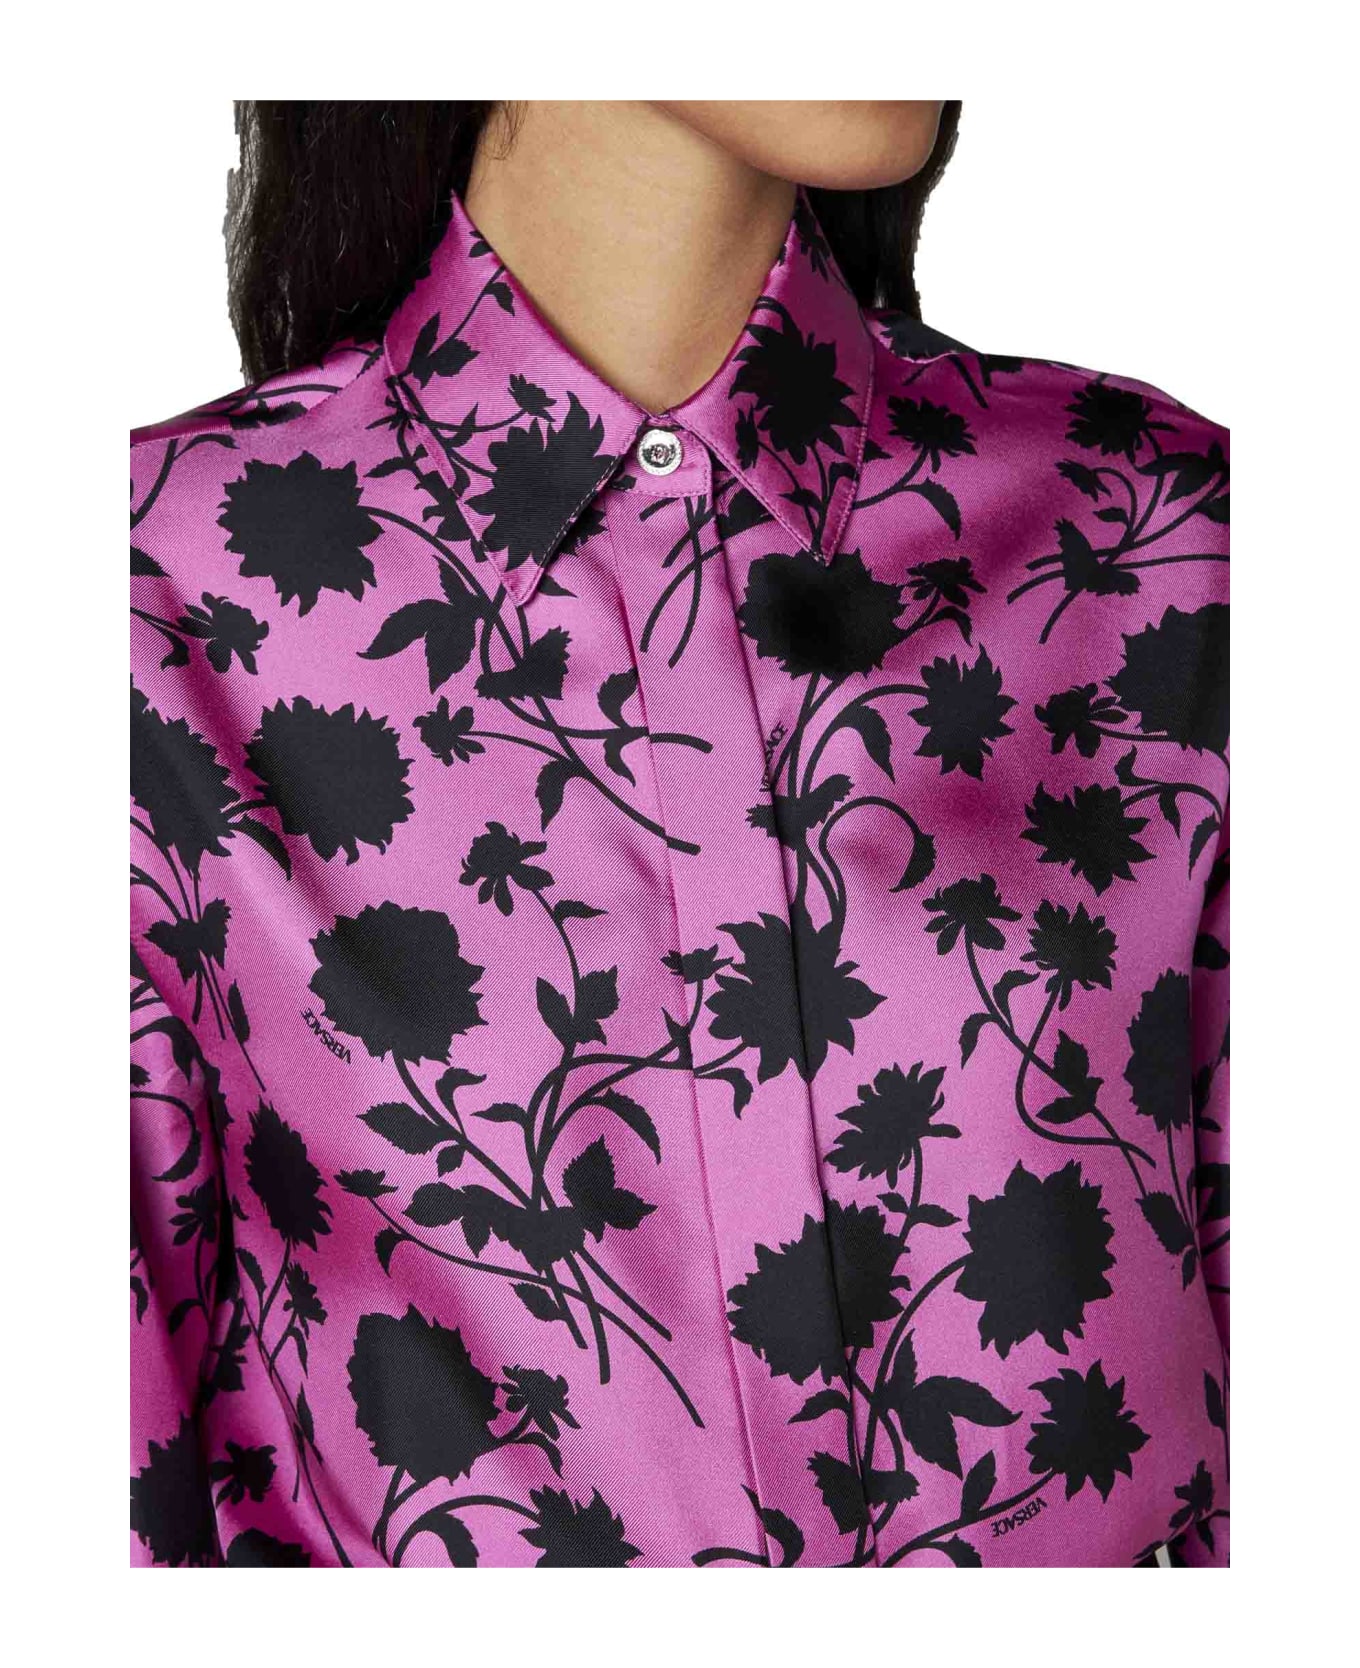 Versace Informal Shirt Floral Silhouette Print Twill Silk Fabric 50% - Waterlily Black